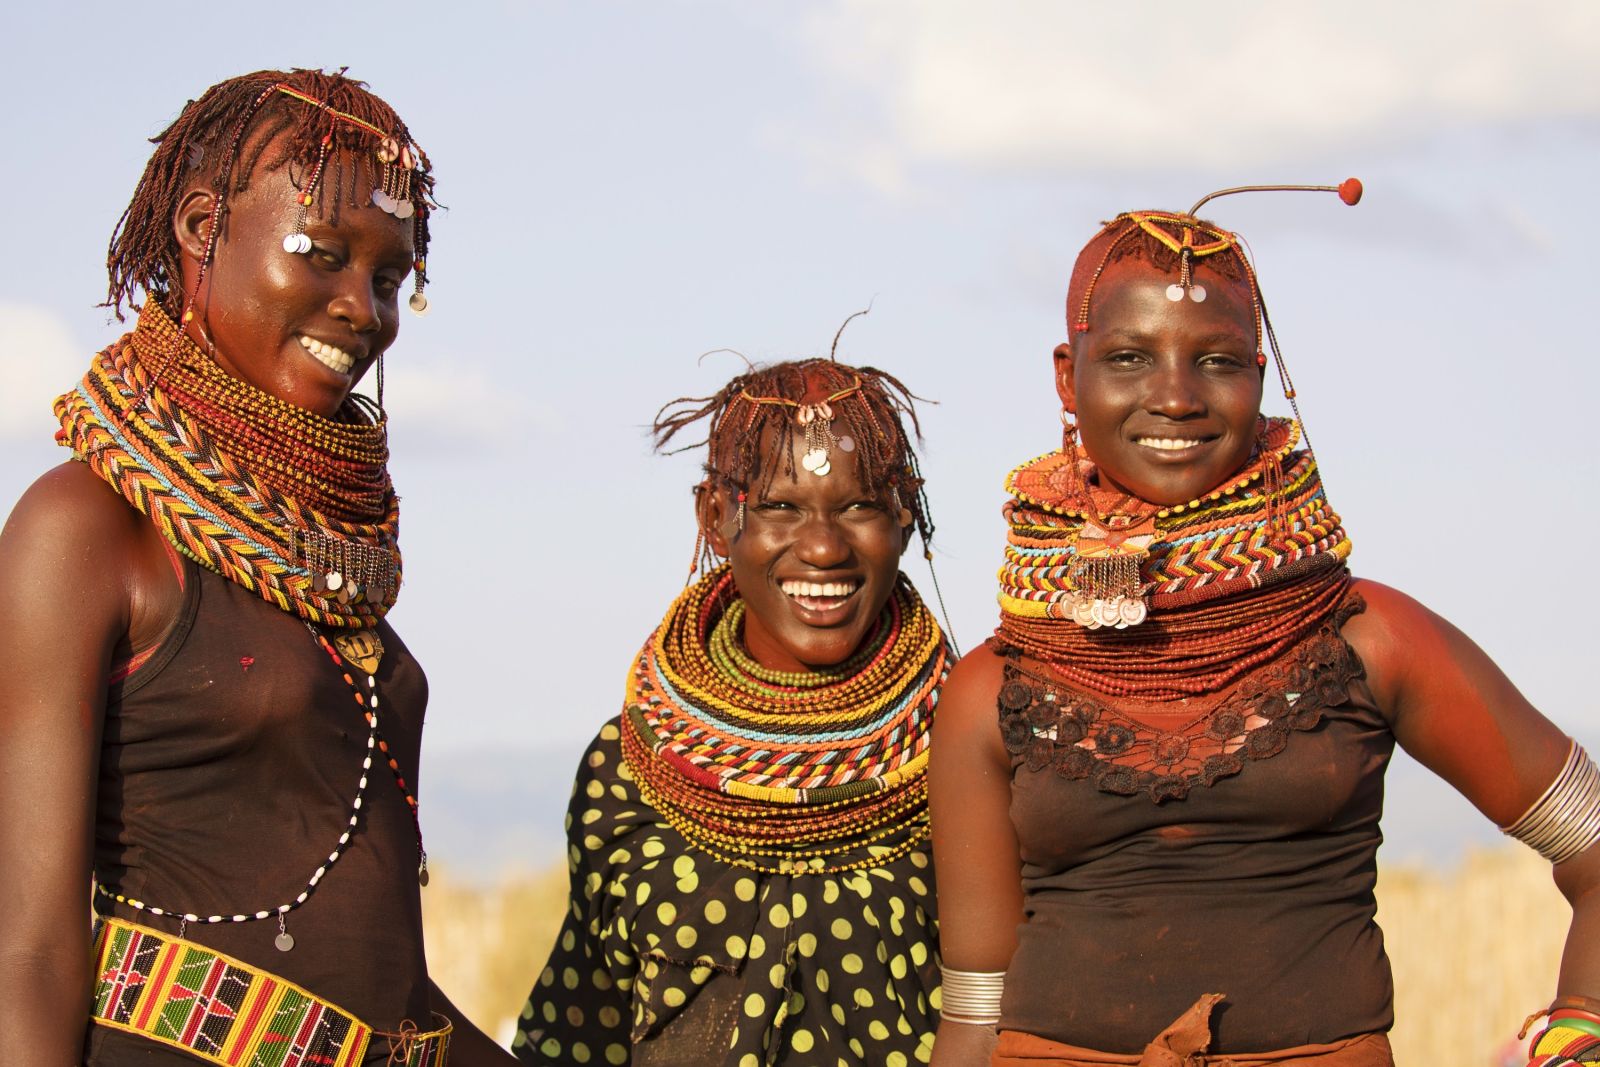 Turkana-Frauen